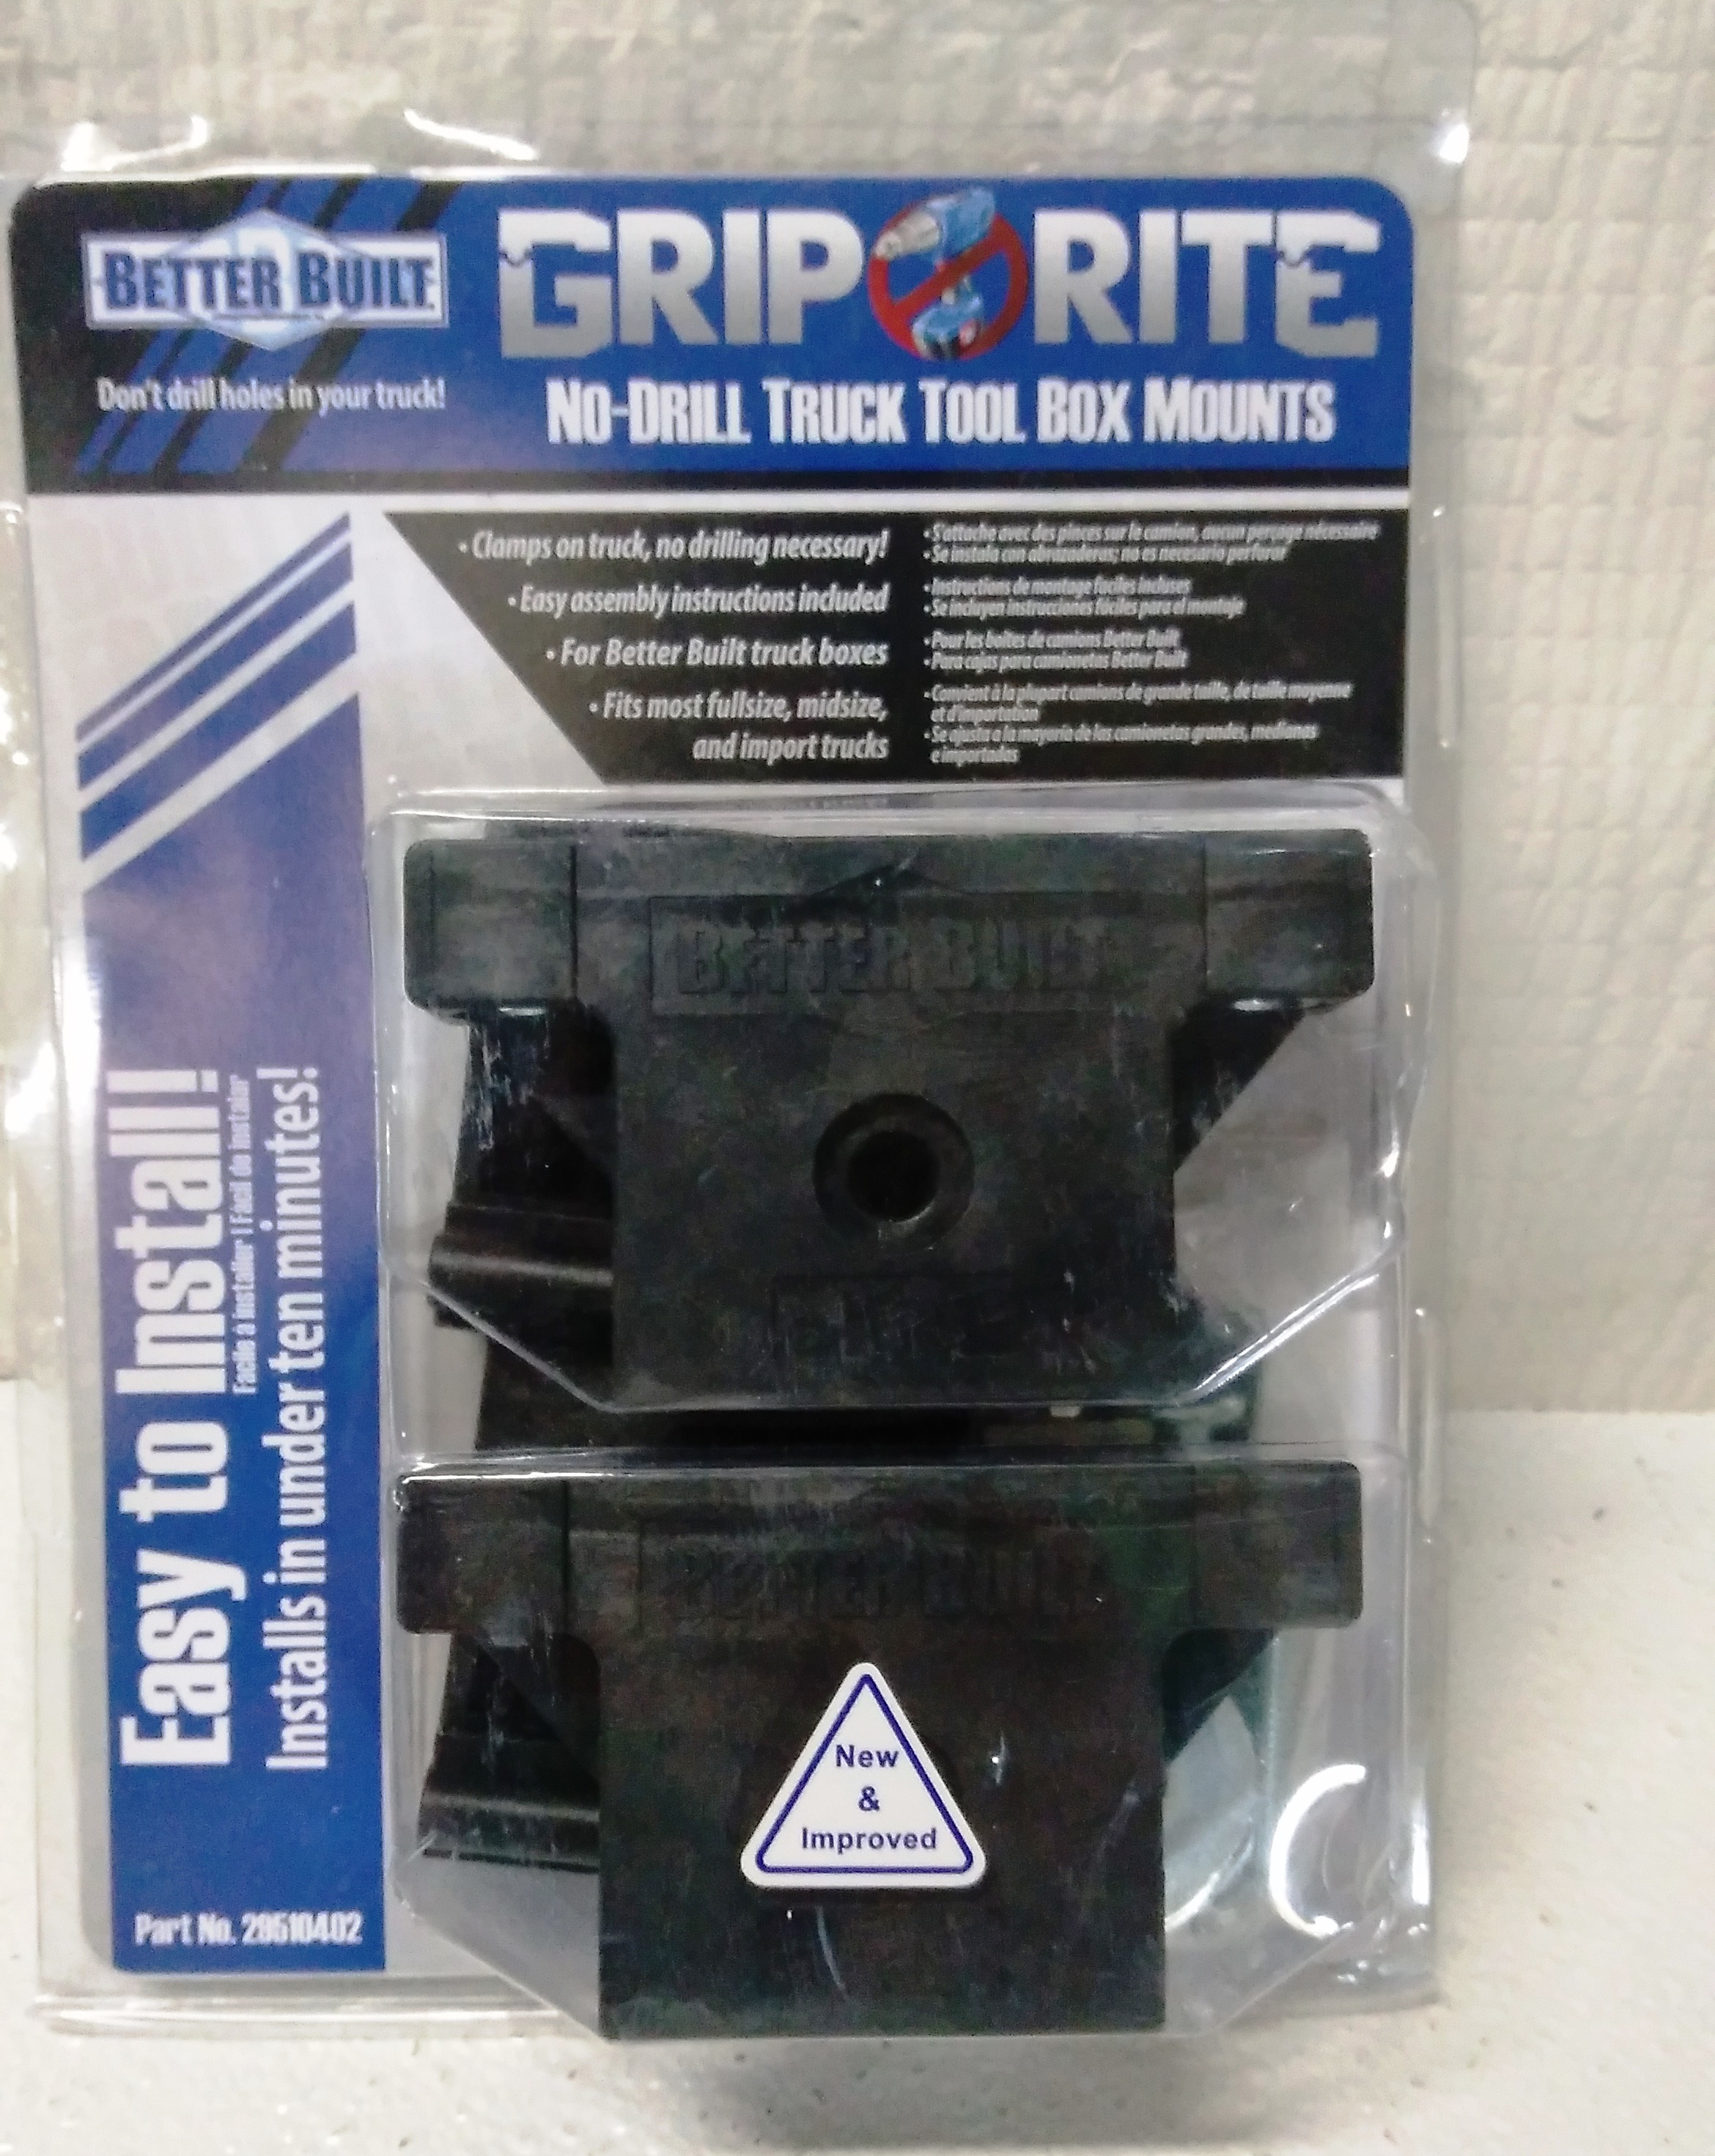 grip rite tool box mounting kit instructions